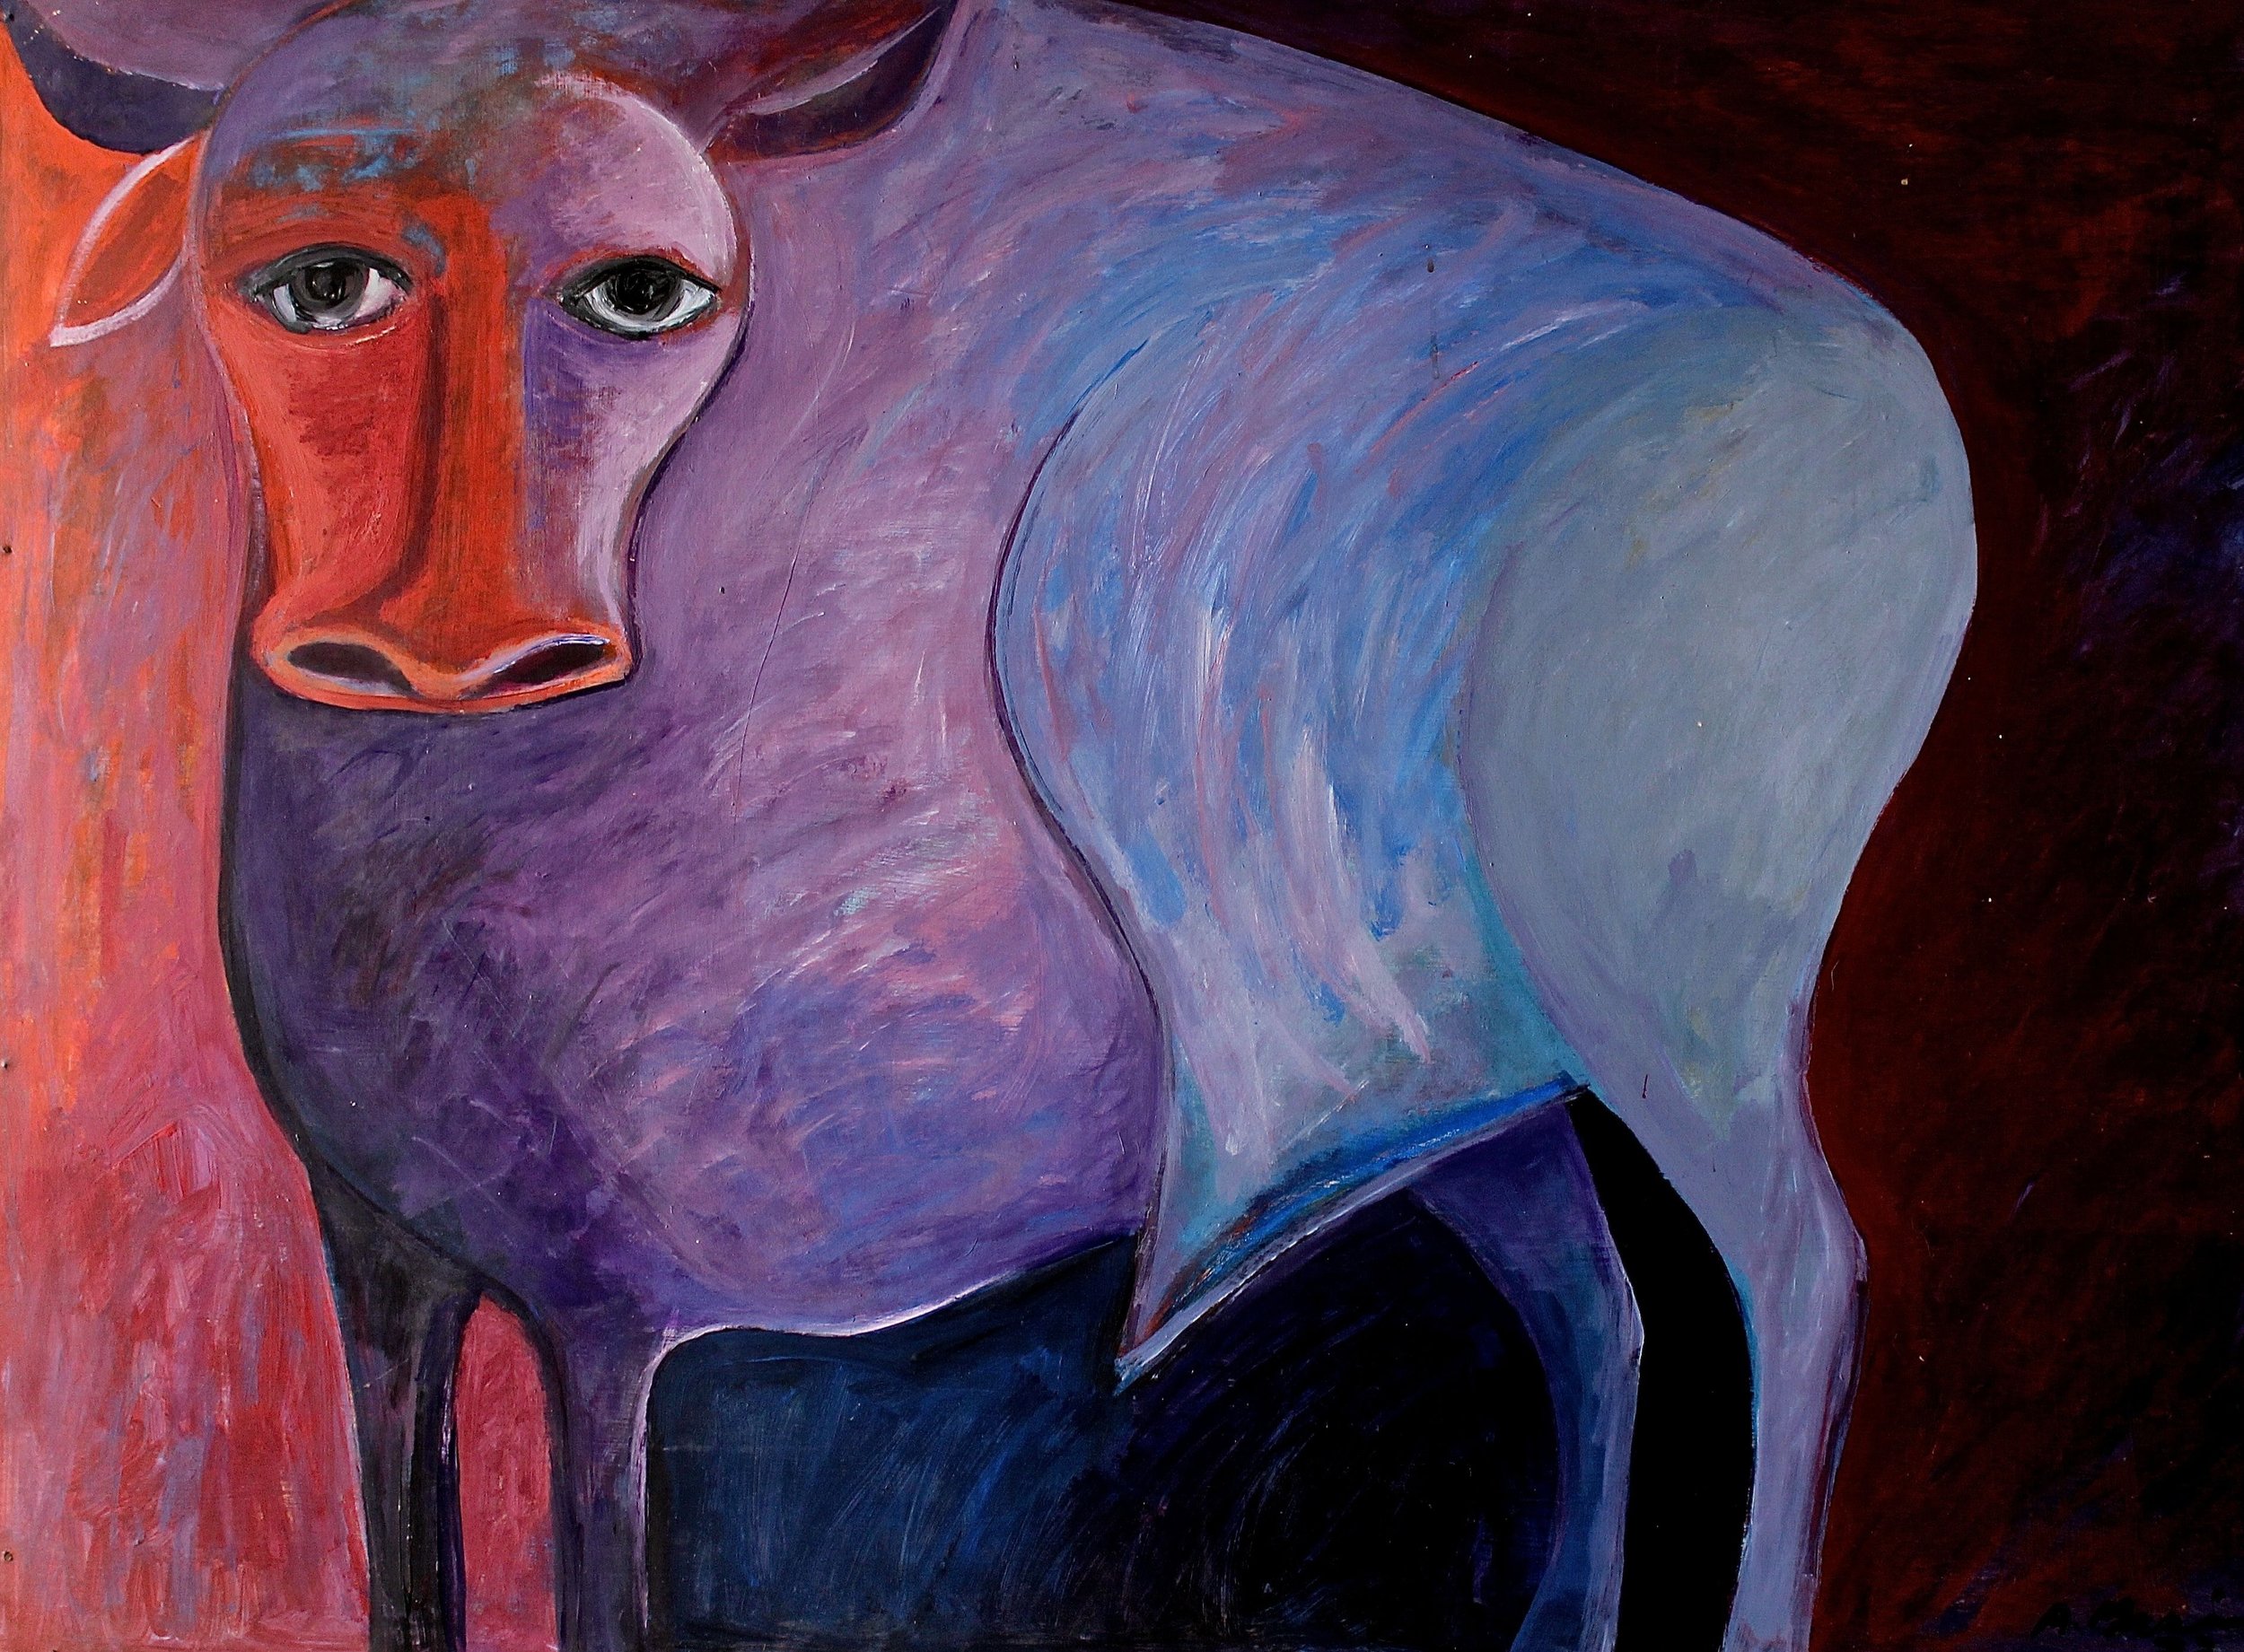  The Bull, 1973, Oil on wood, 120 x 90 cm  